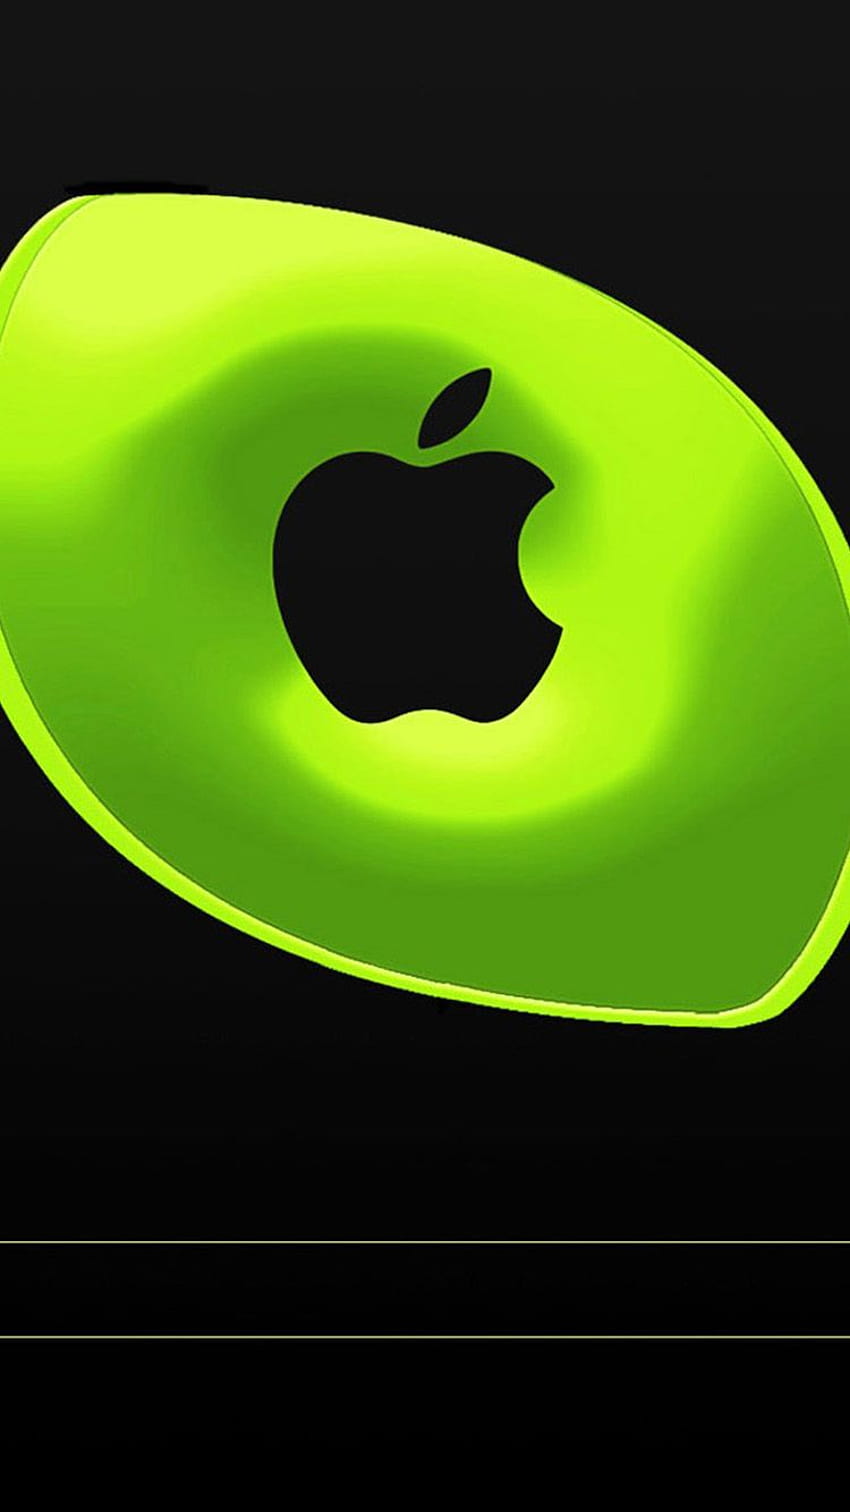 Cyan Apple Background  Apple background Apple logo wallpaper iphone Apple  wallpaper iphone